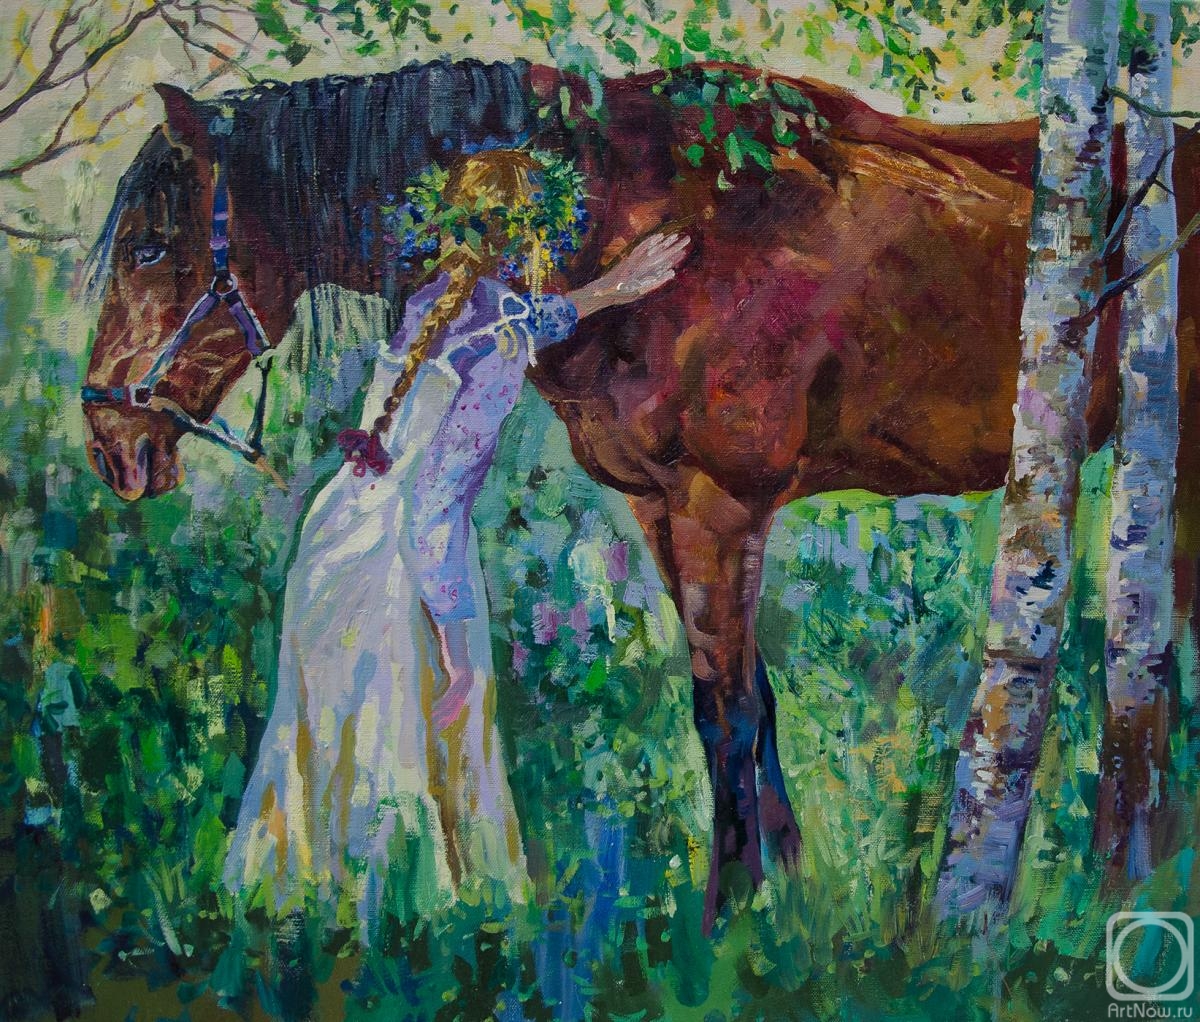 Takhtamyshev Sergey. Horse Rodeo and Zlata